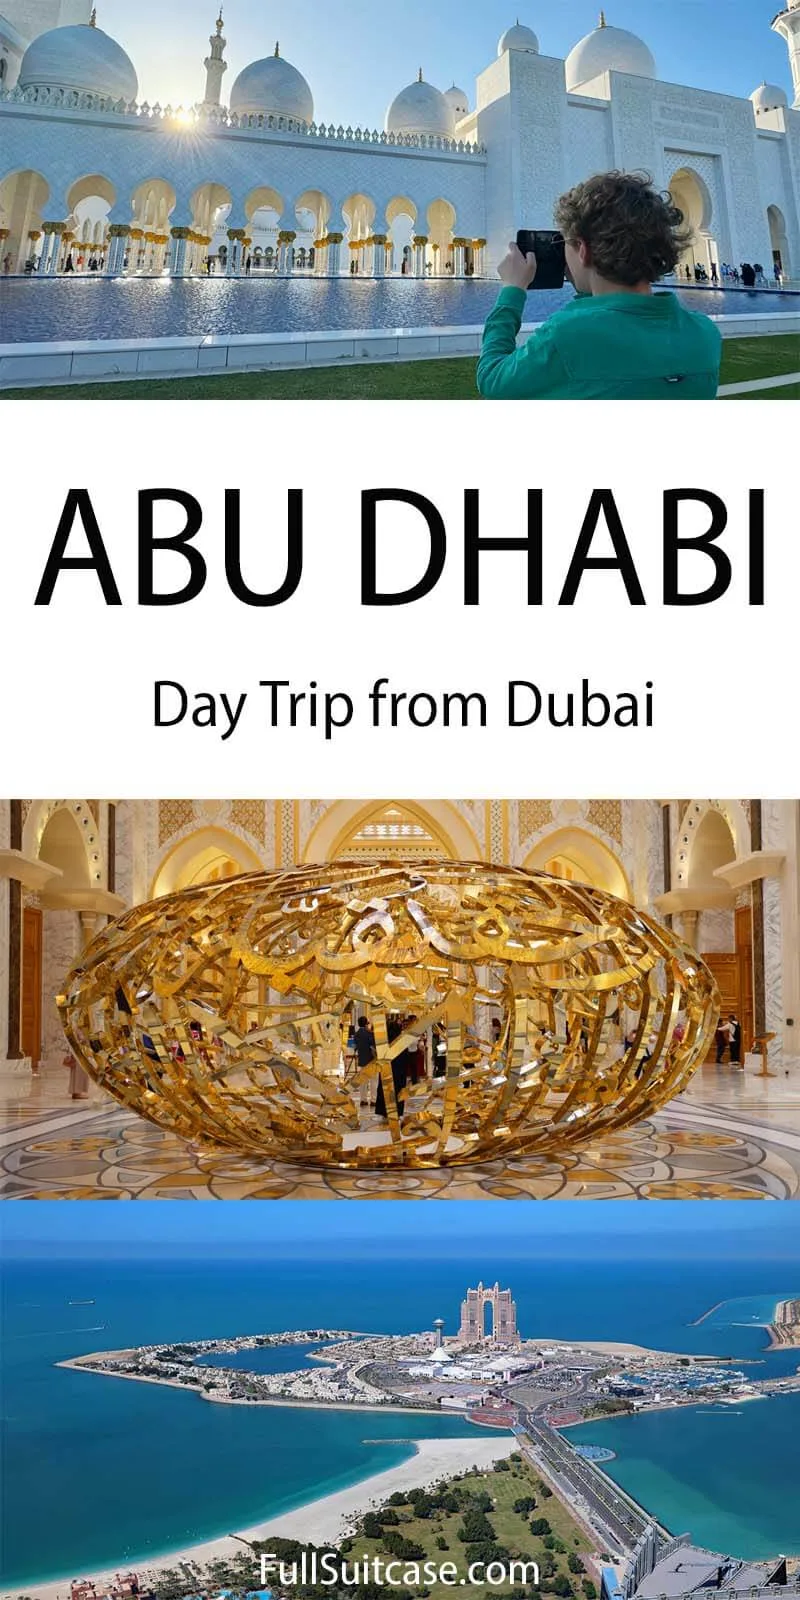 Abu Dhabi day trip from Dubai